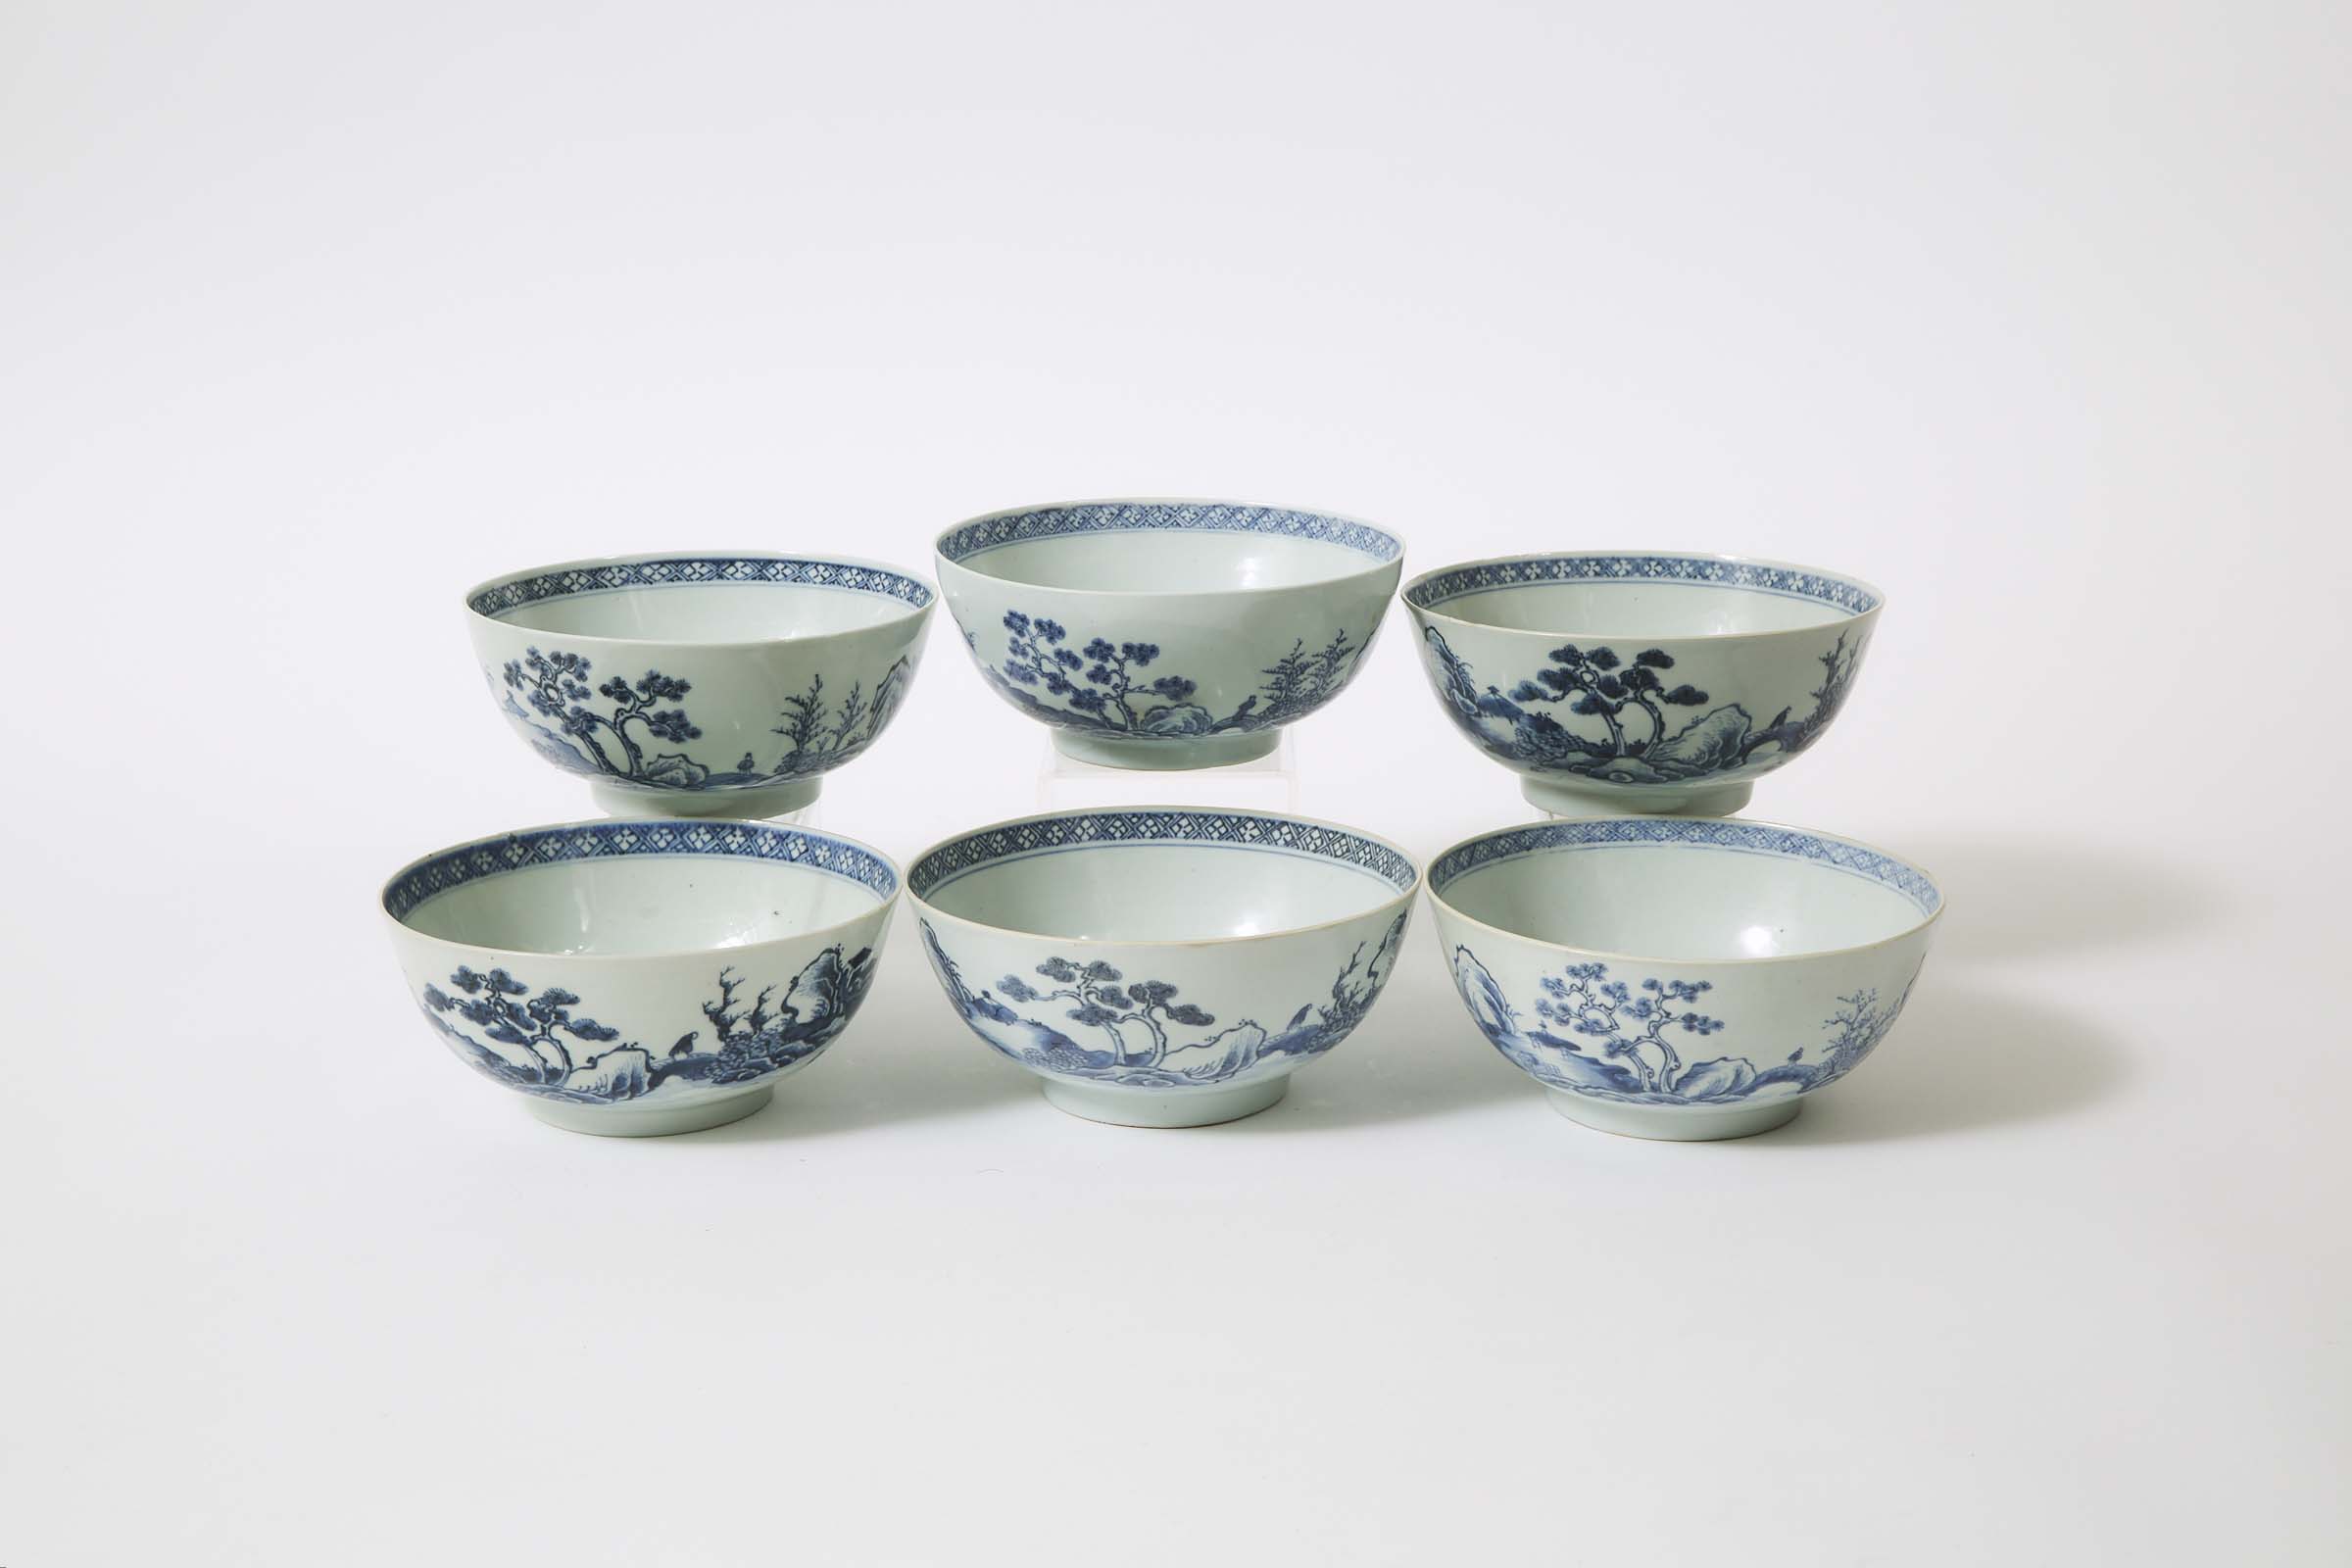 A Set of Six 'Scholar on Bridge' Pattern Large Bowls from the Nanking Cargo, Qianlong Period, Circa 1750